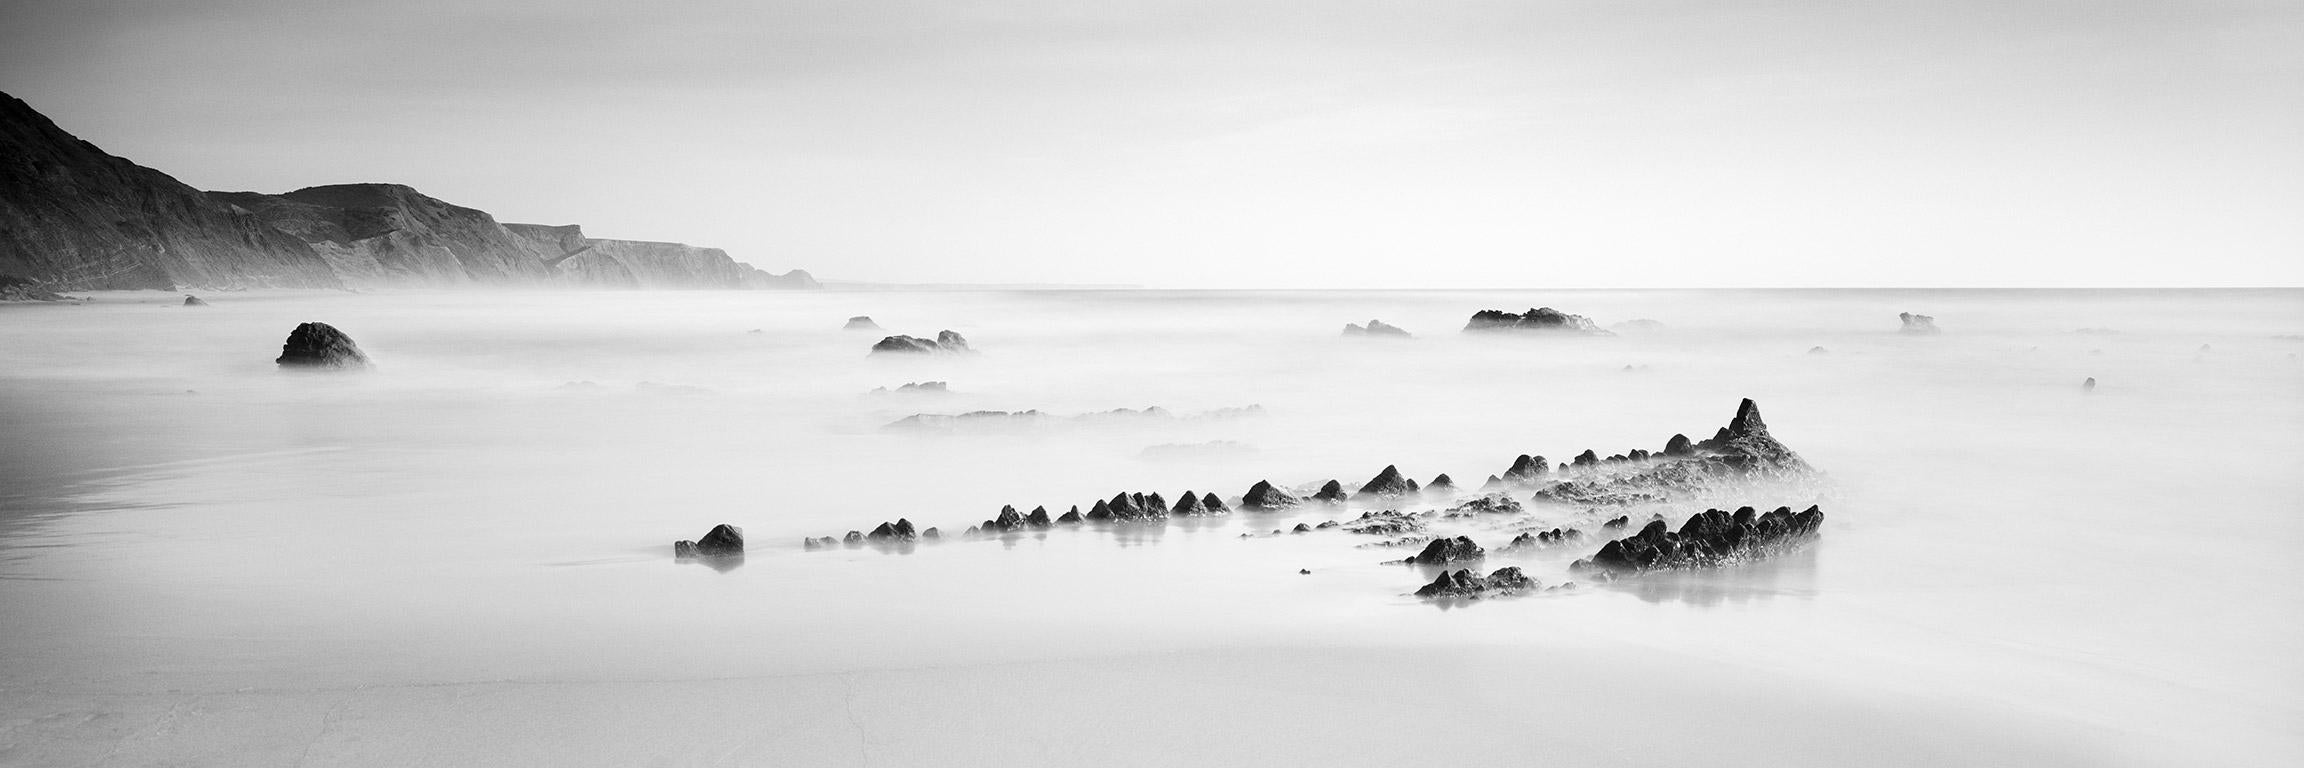 Gerald Berghammer Landscape Photograph - Fishbones Panorama, Beach, Shoreline, Portugal, black and white landscape print